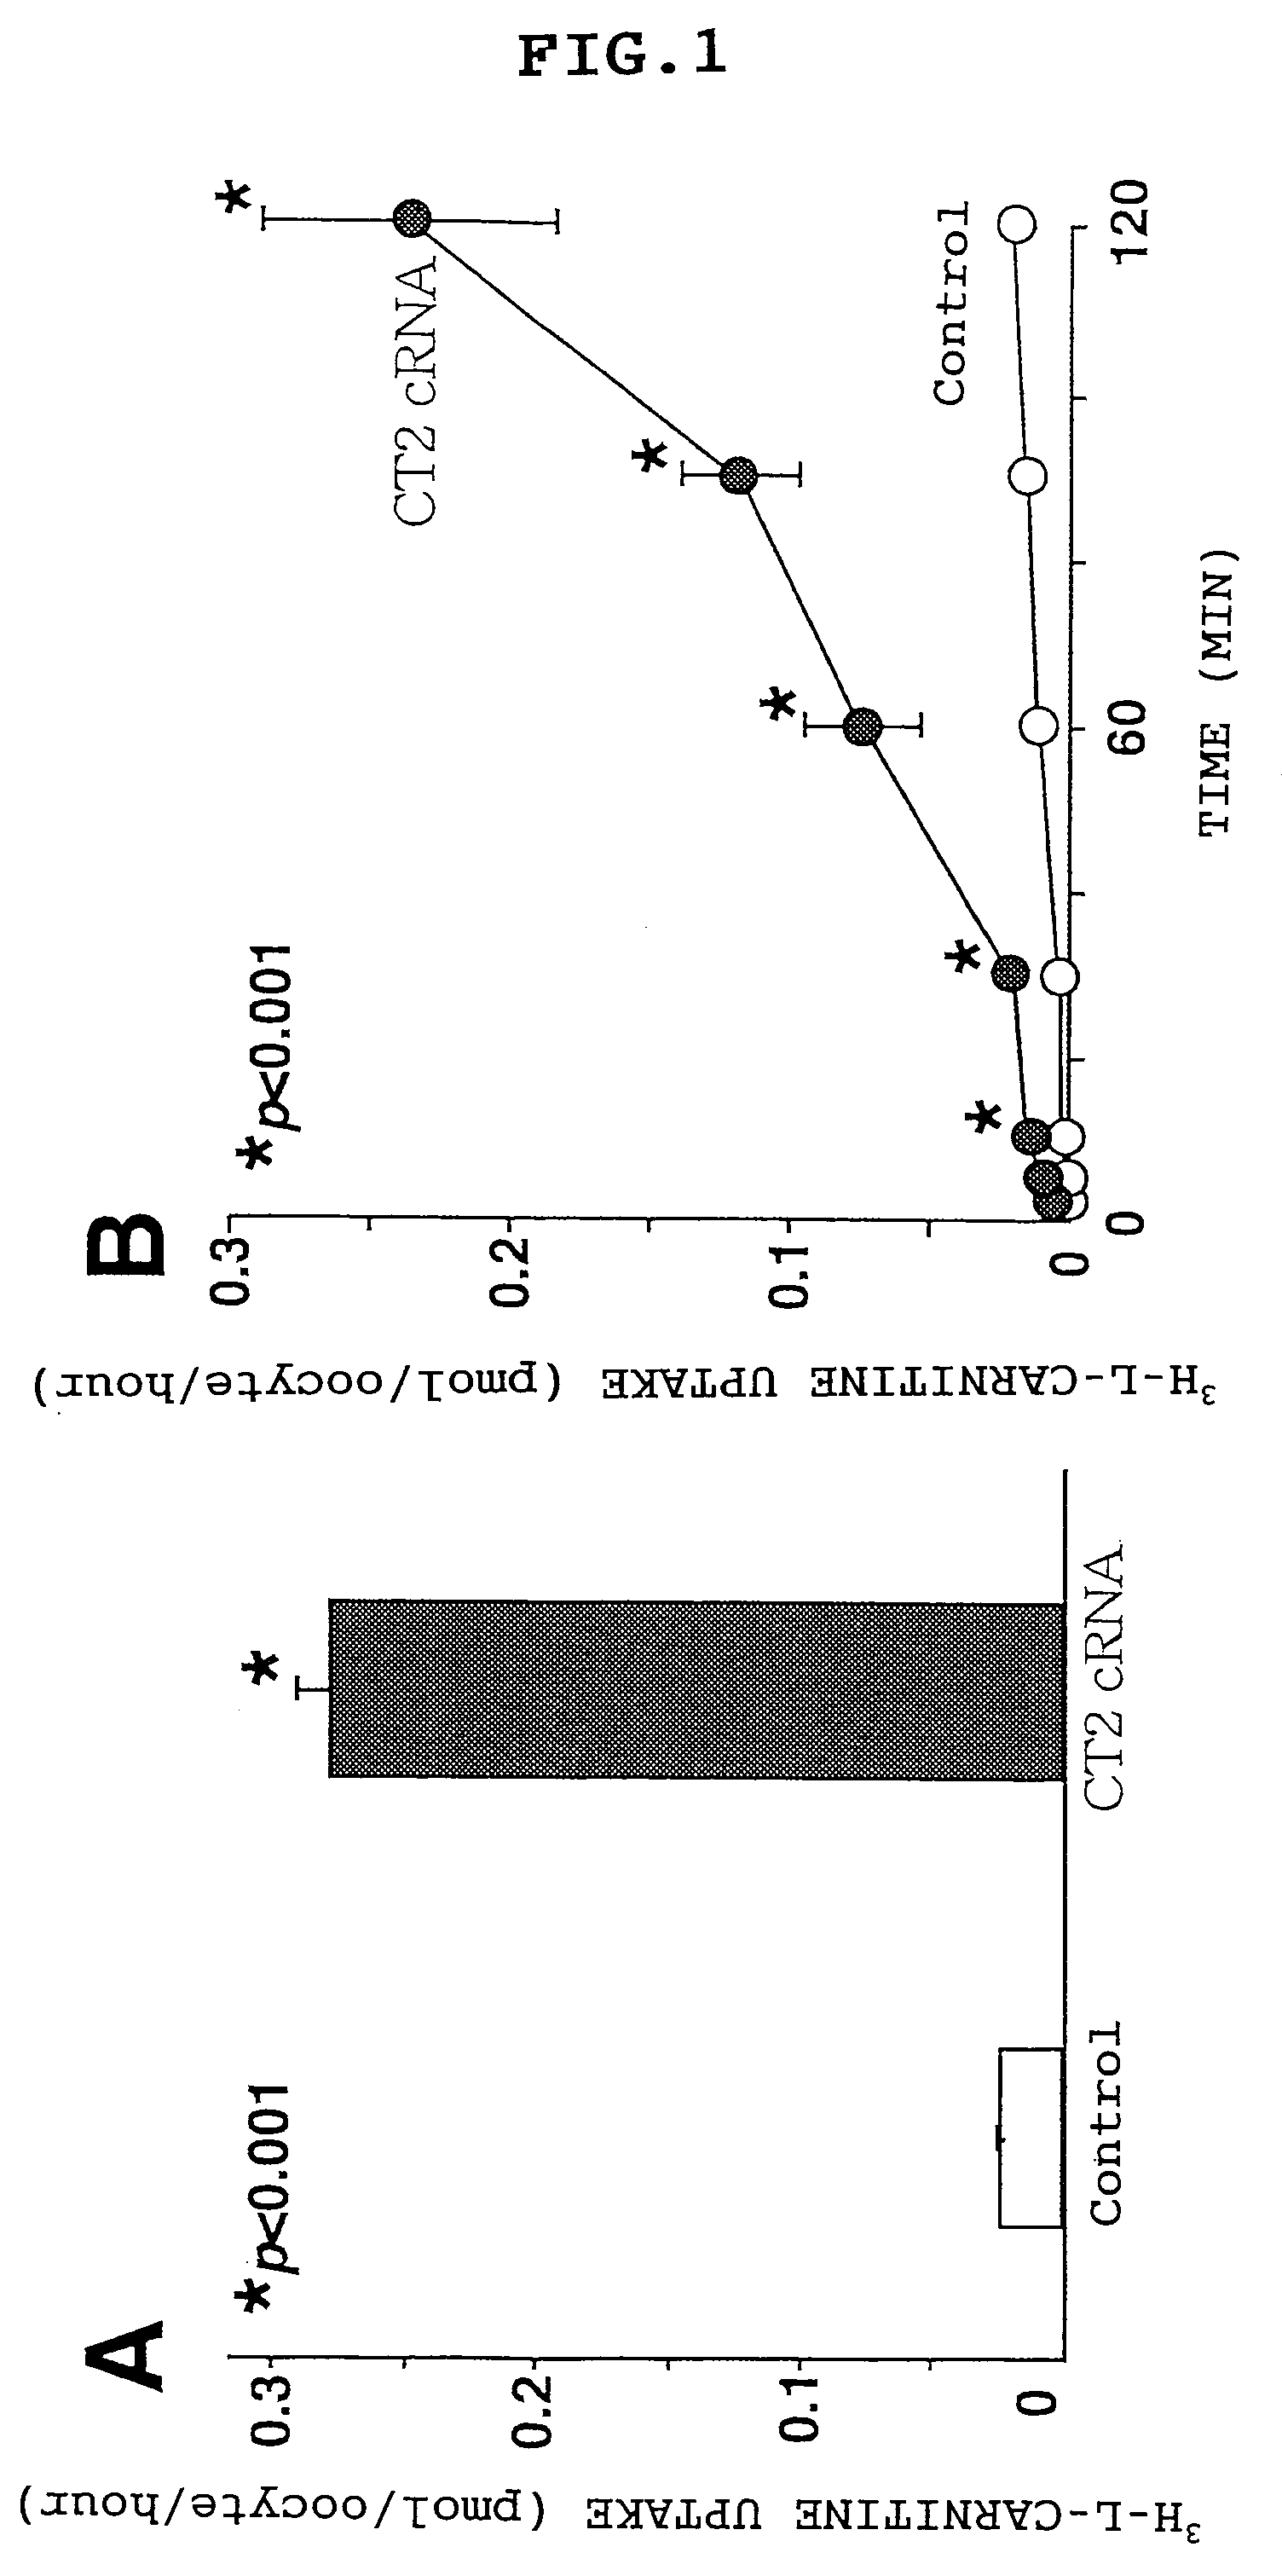 Method of modulating a testicular carnitine transporter